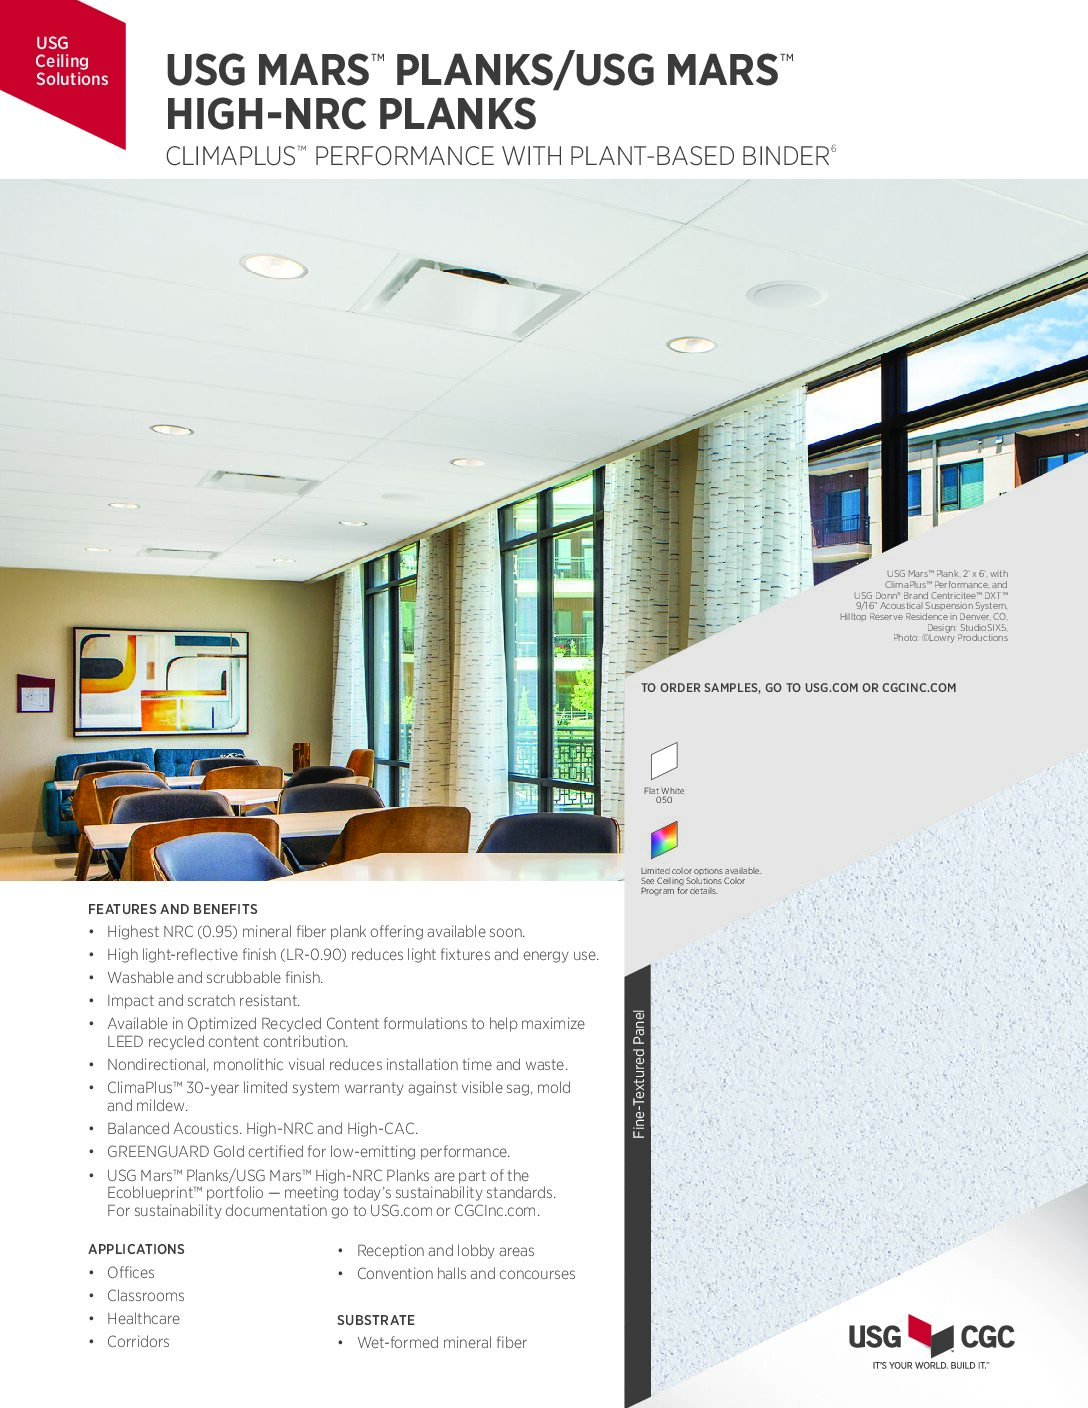 USG Securock Brand Ultralight Glass-Mat Sheathing Refular and Firecode-X Data - Document Screen Grab